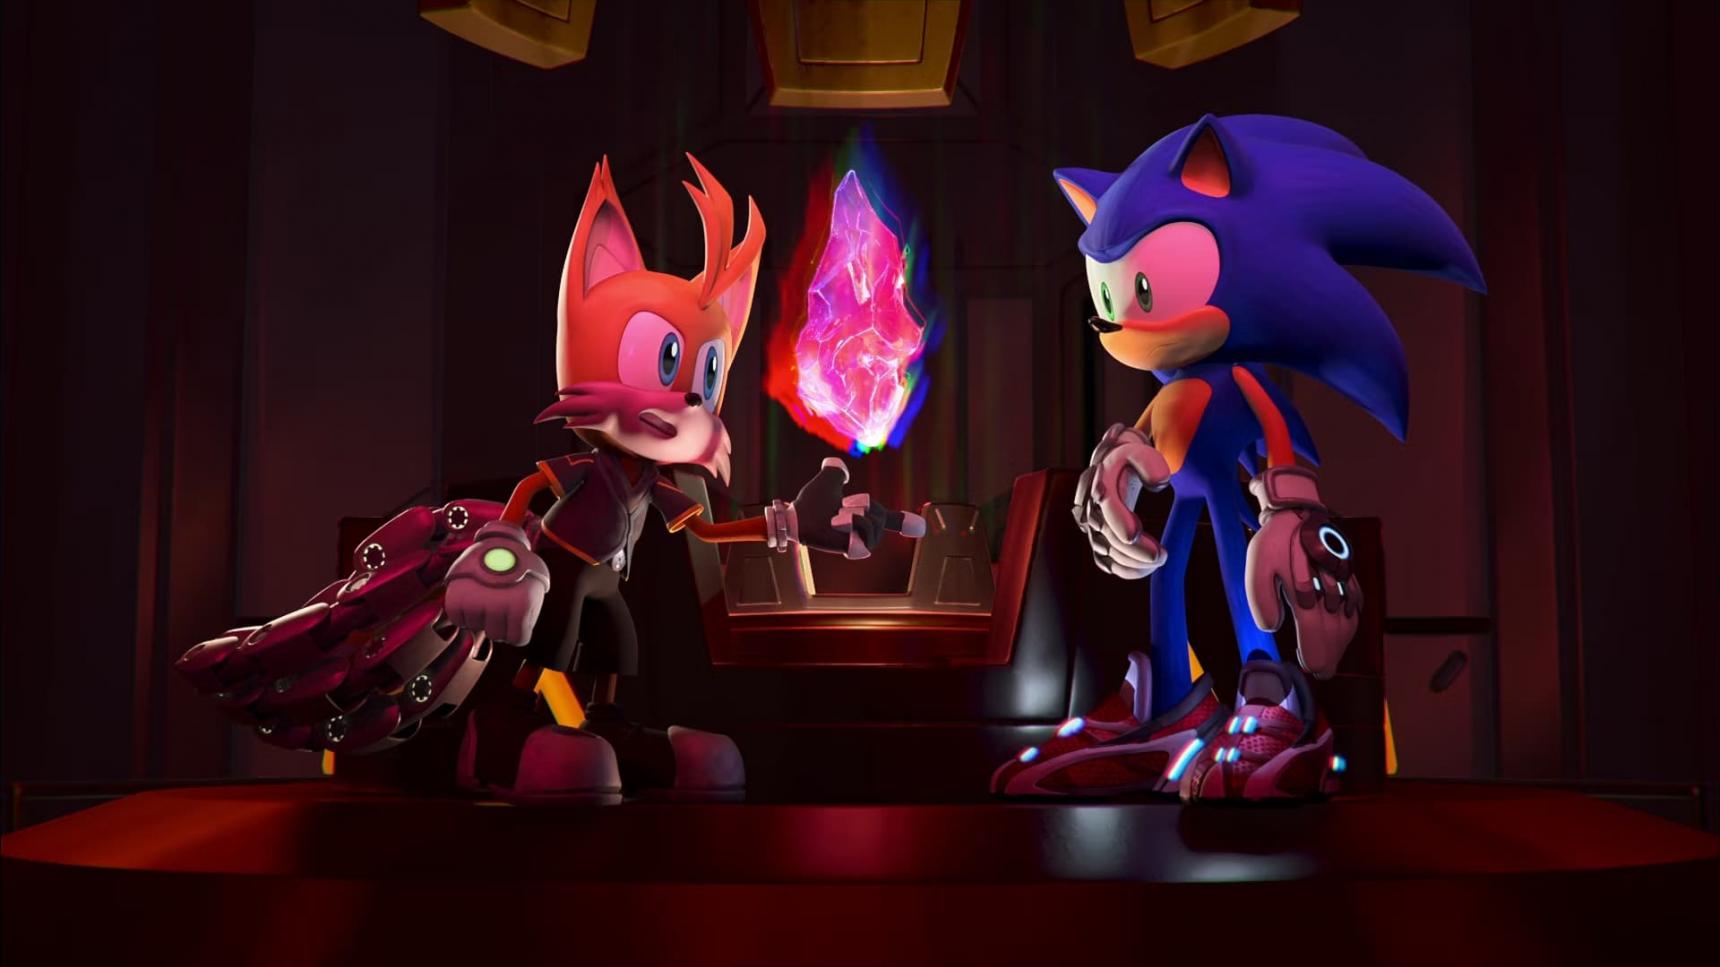 Poster del episodio 3 de Sonic Prime online